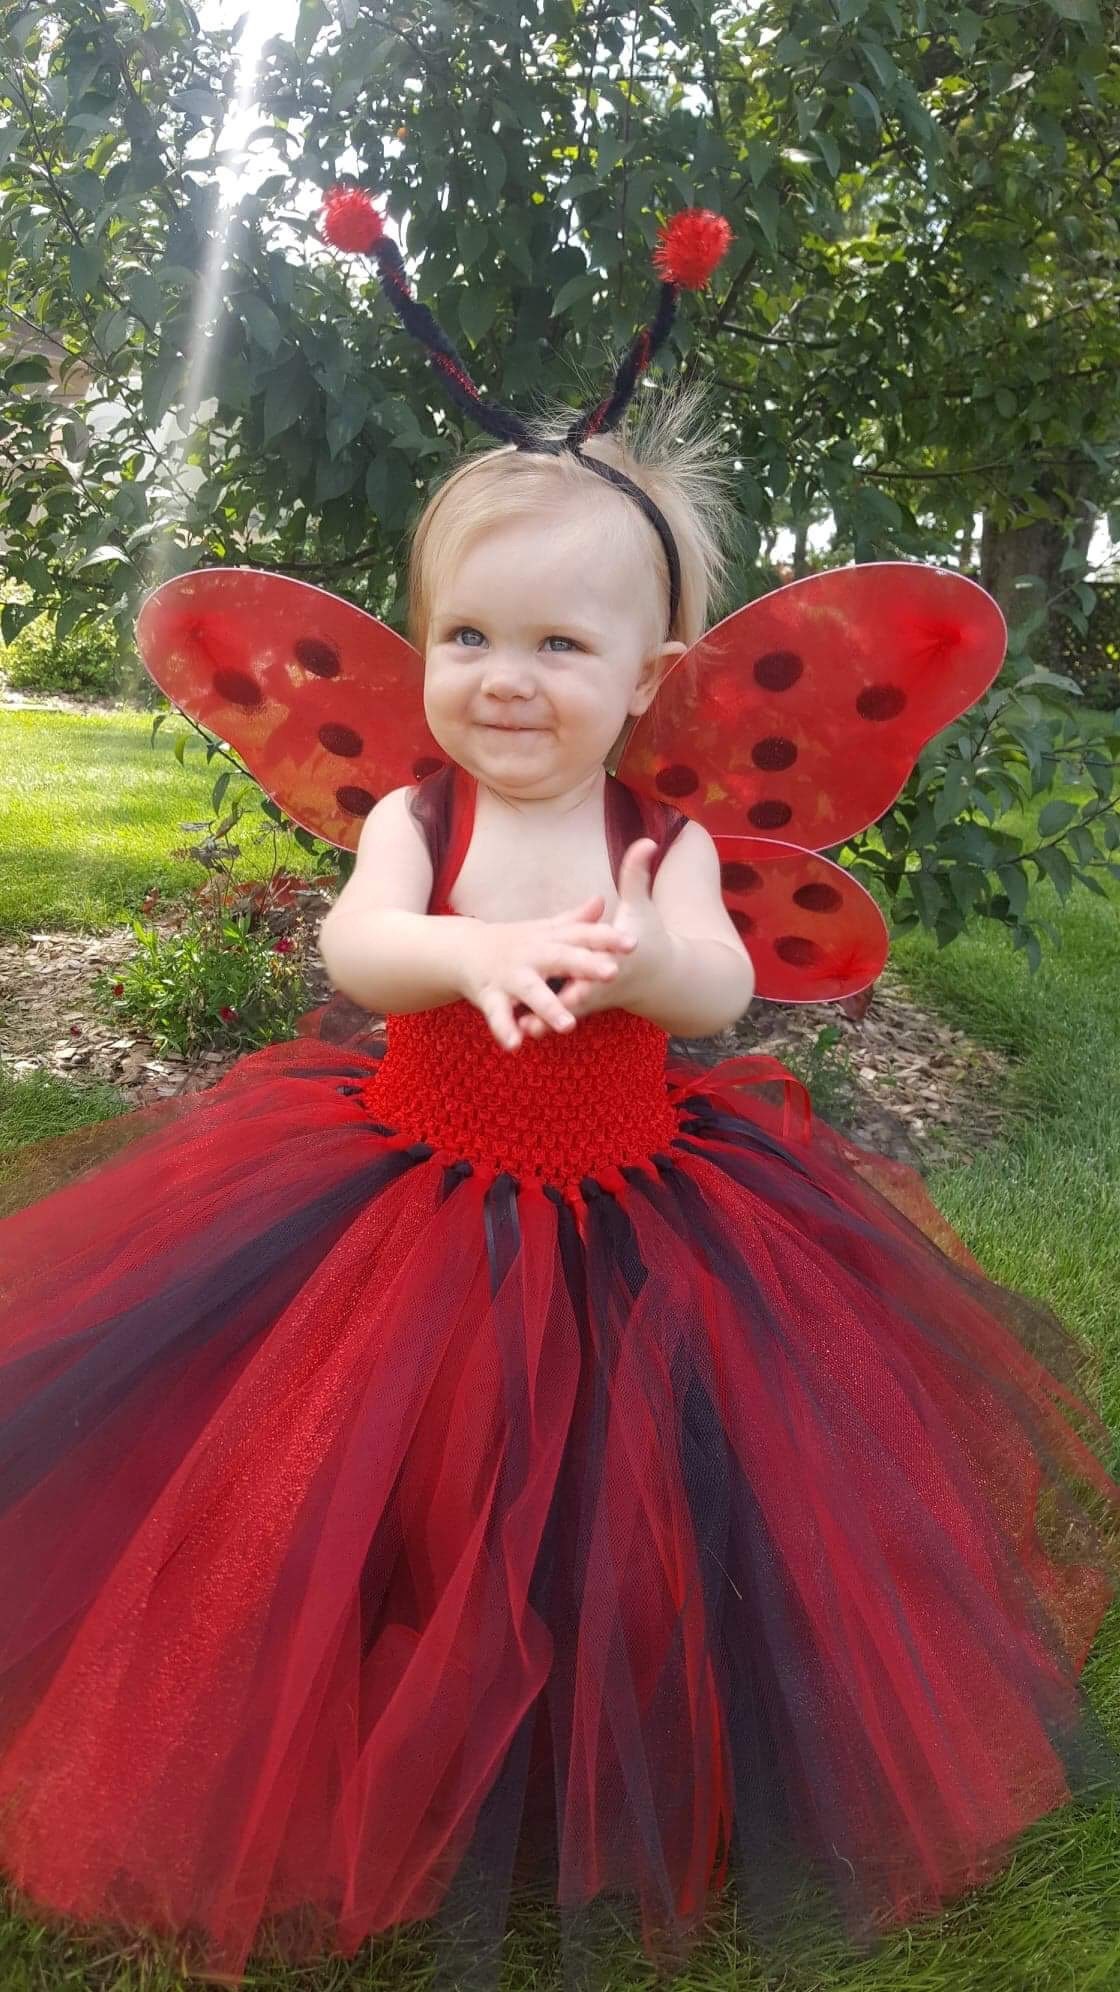 Girls Ladybug Costume, Baby Toddler Halloween Costume – Needles Knots n Bows